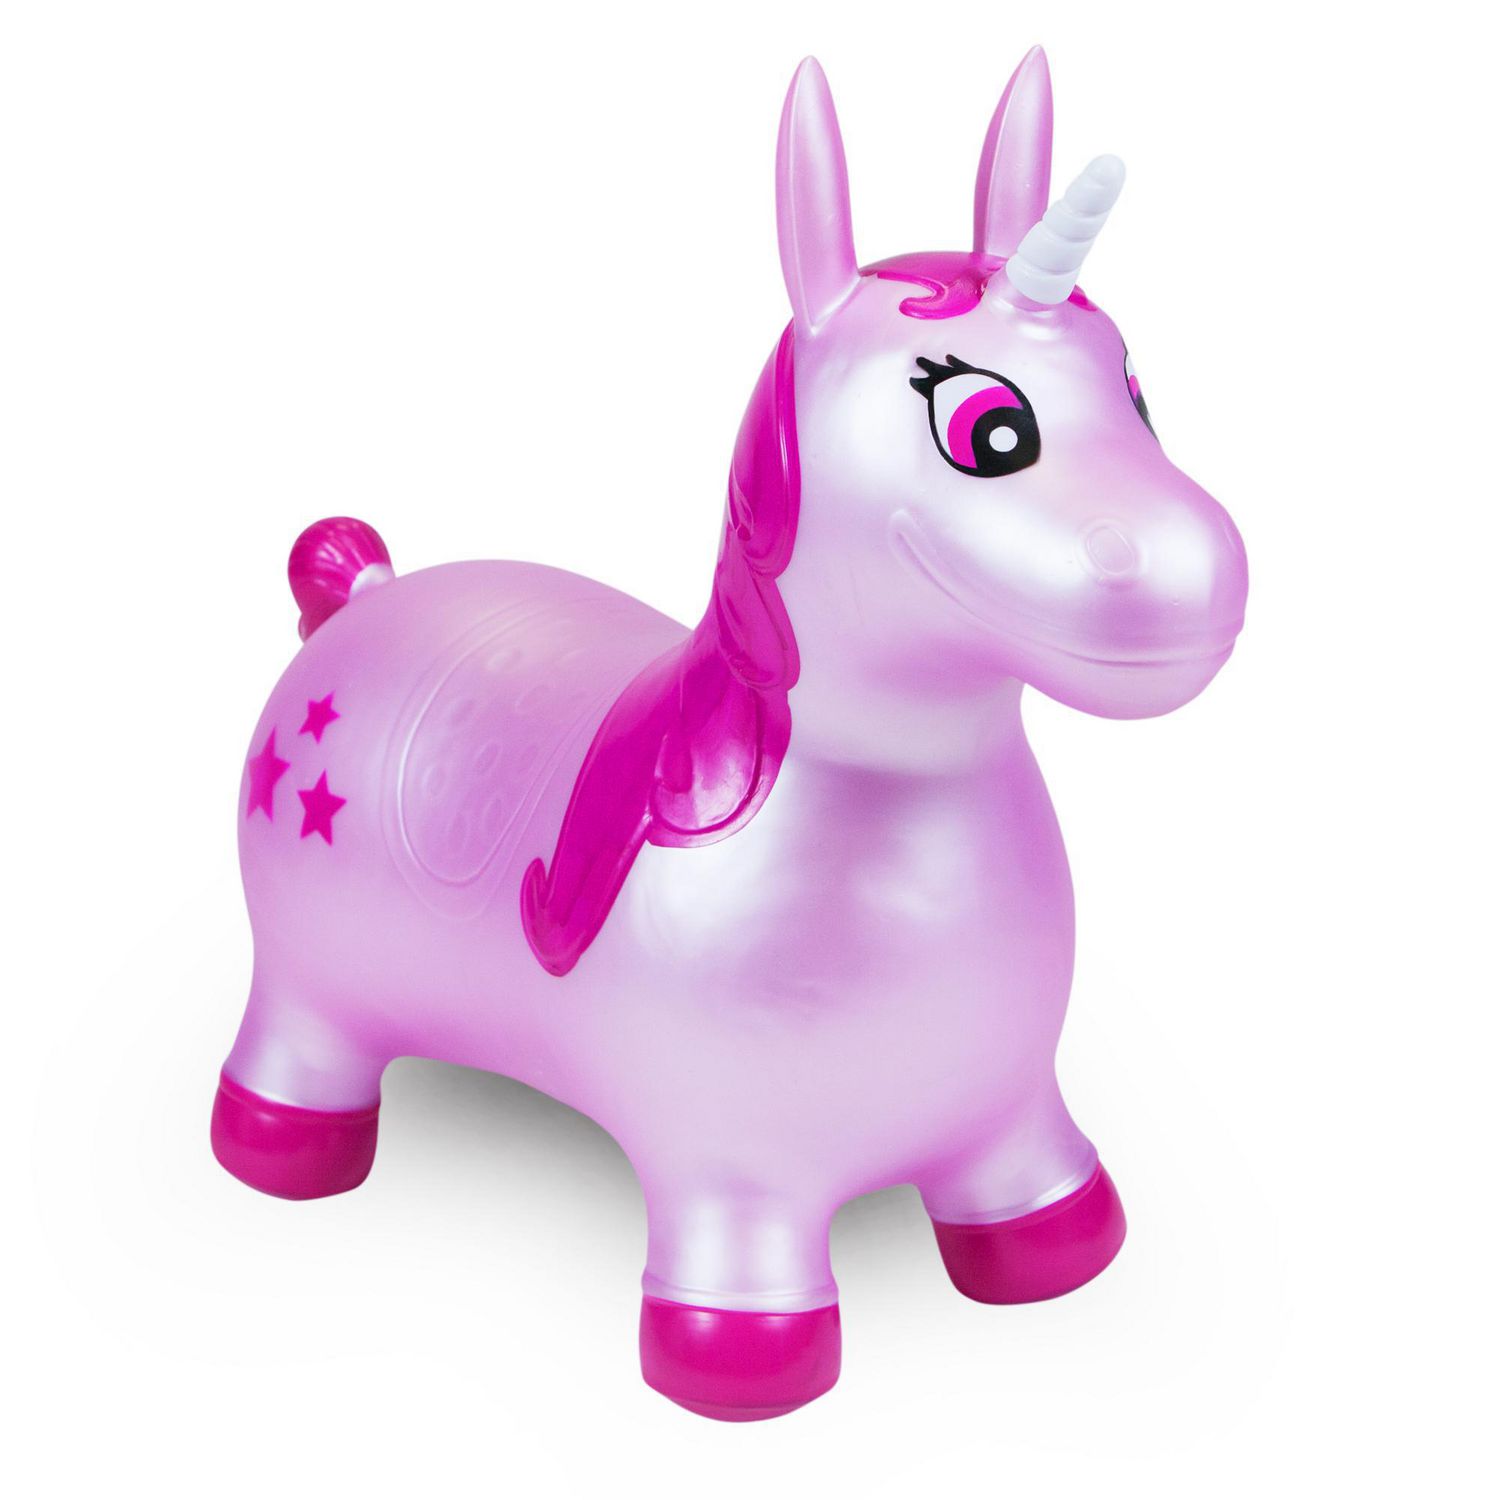 Animal hopper unicorn - Search